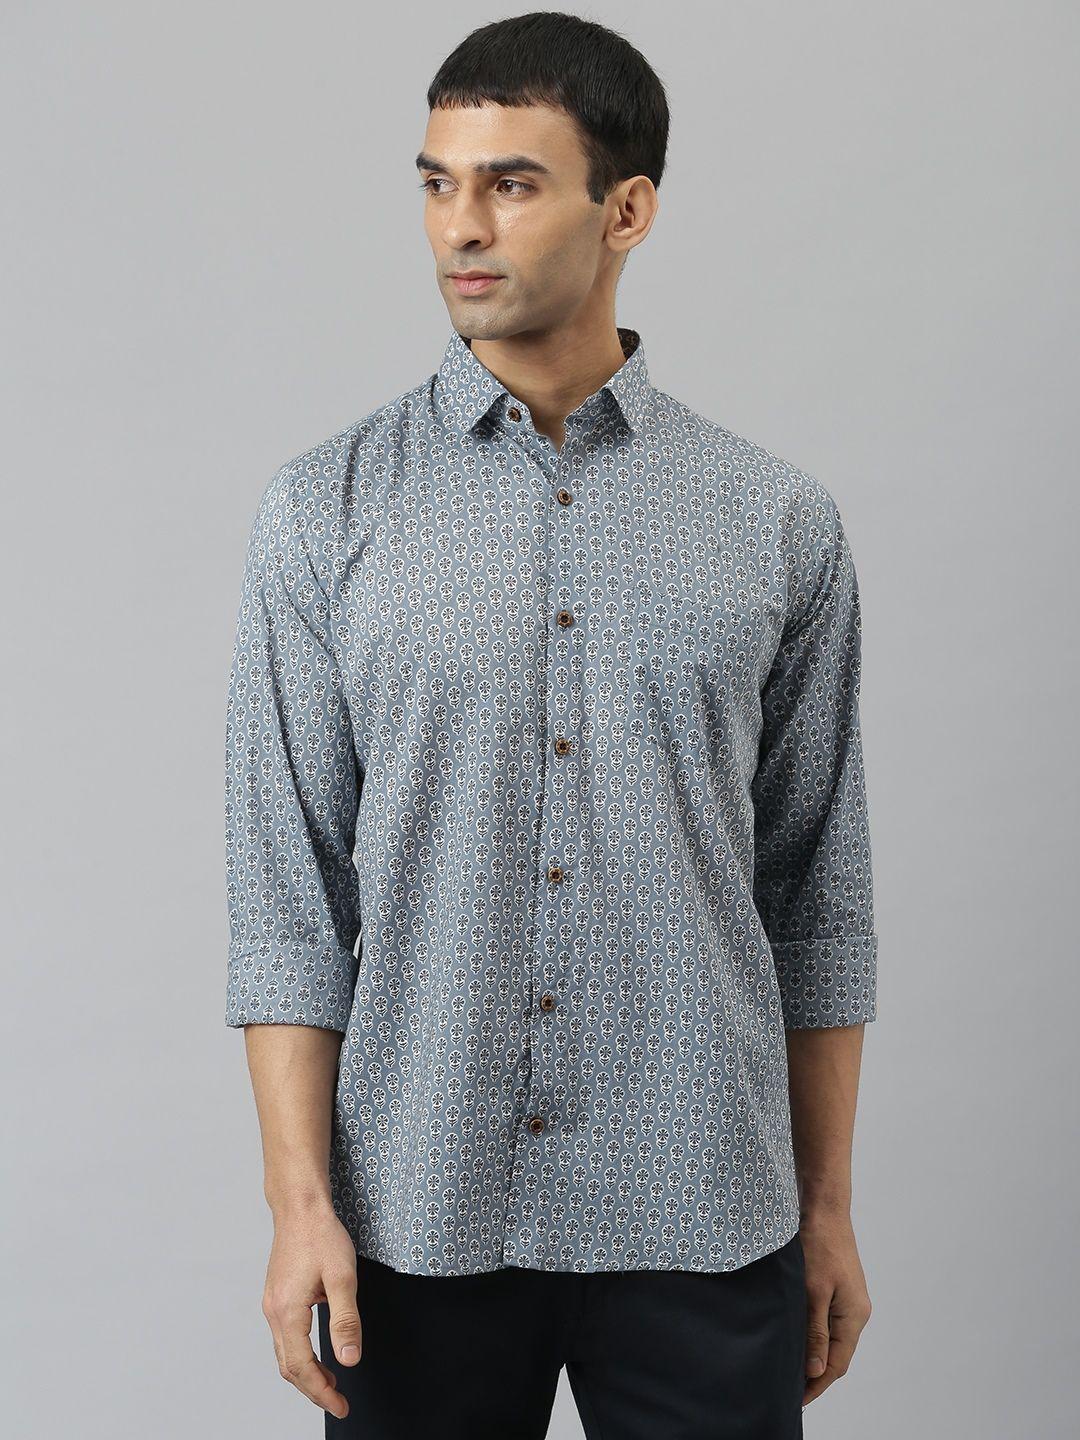 millennial men grey comfort printed casual shirt